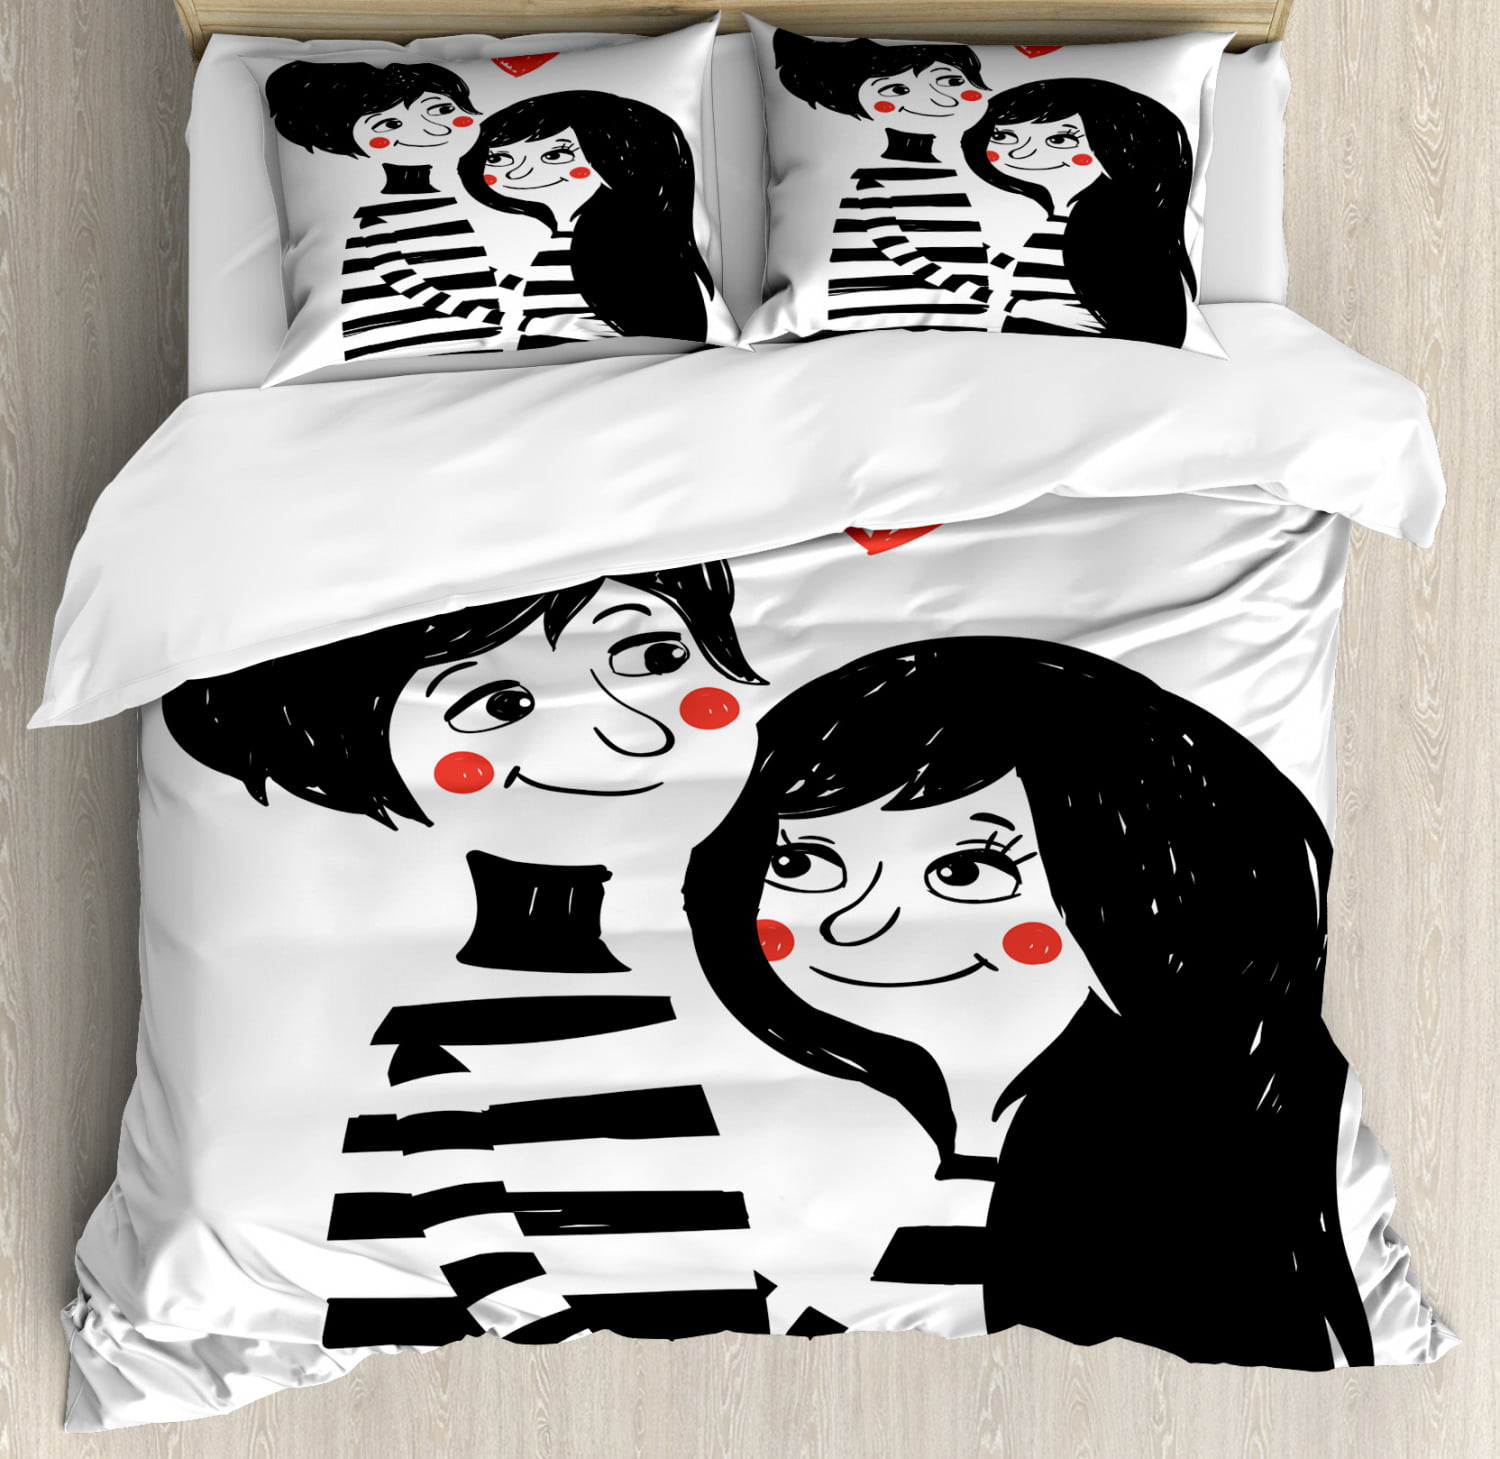 His & Her Side Bedding Set Black and White Couple Duvet Cover Set Valentine 3Pcs 